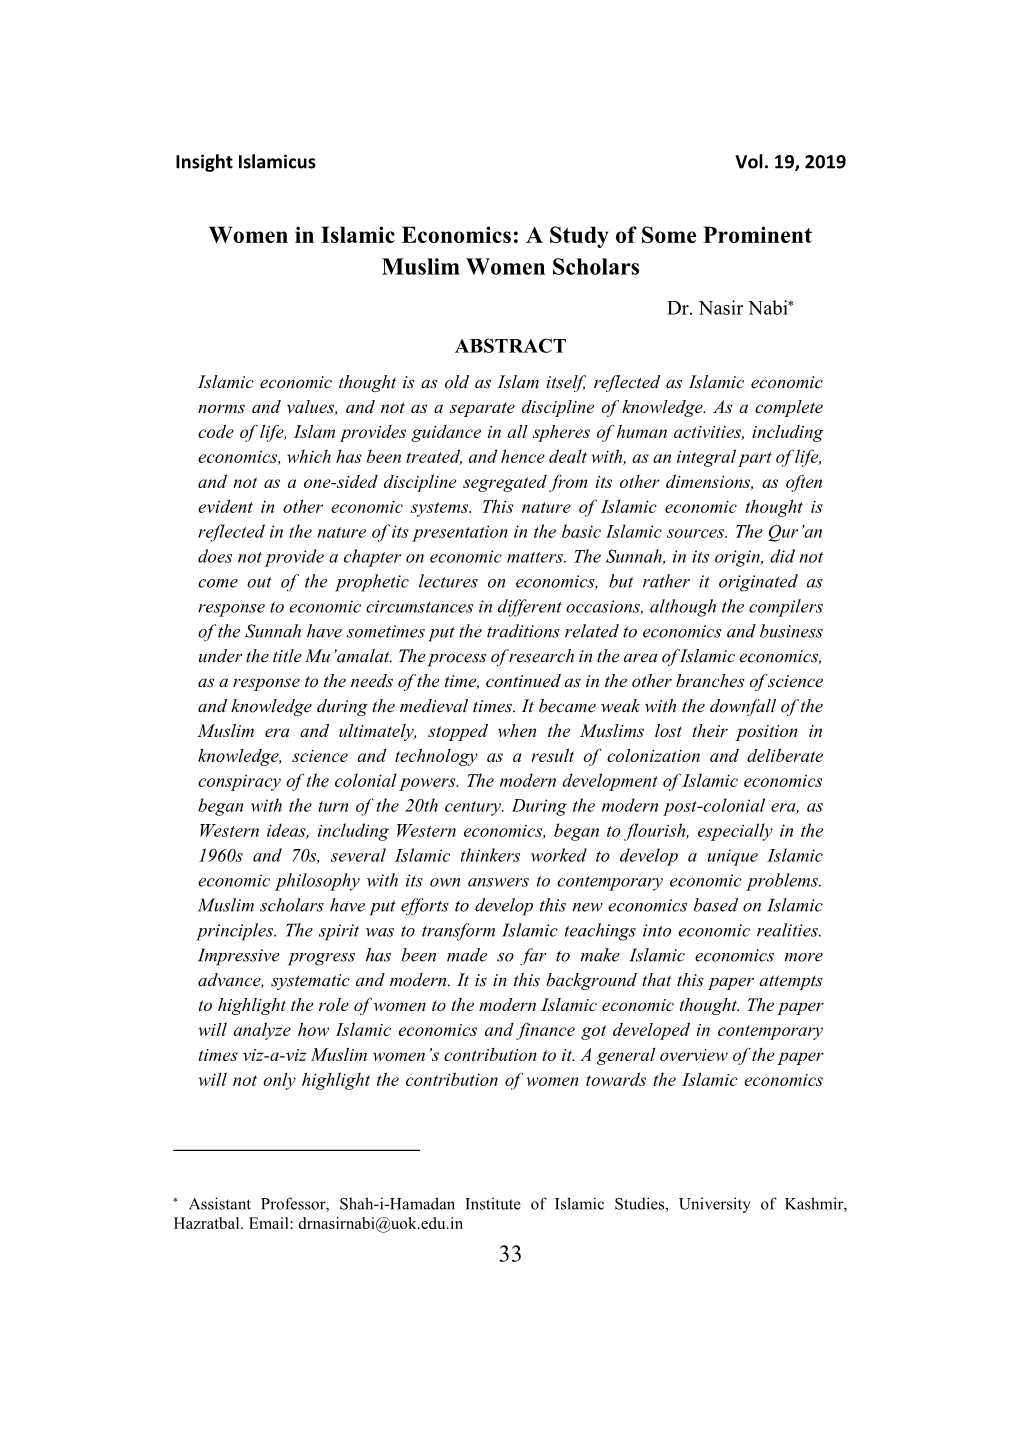 33 Women in Islamic Economics